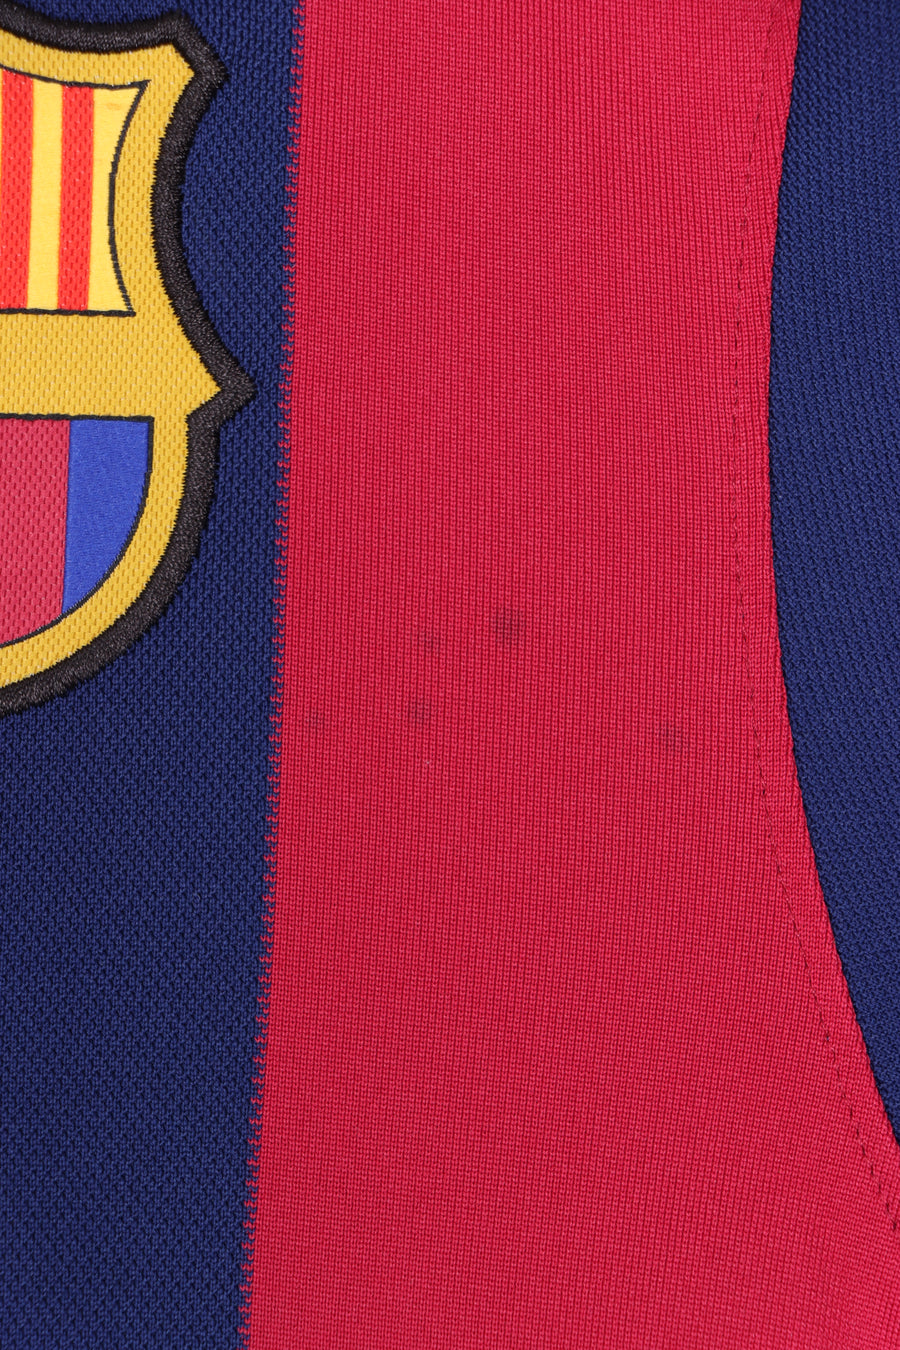 Barcelona 2014/2015 NIKE Home Soccer Jersey (S)